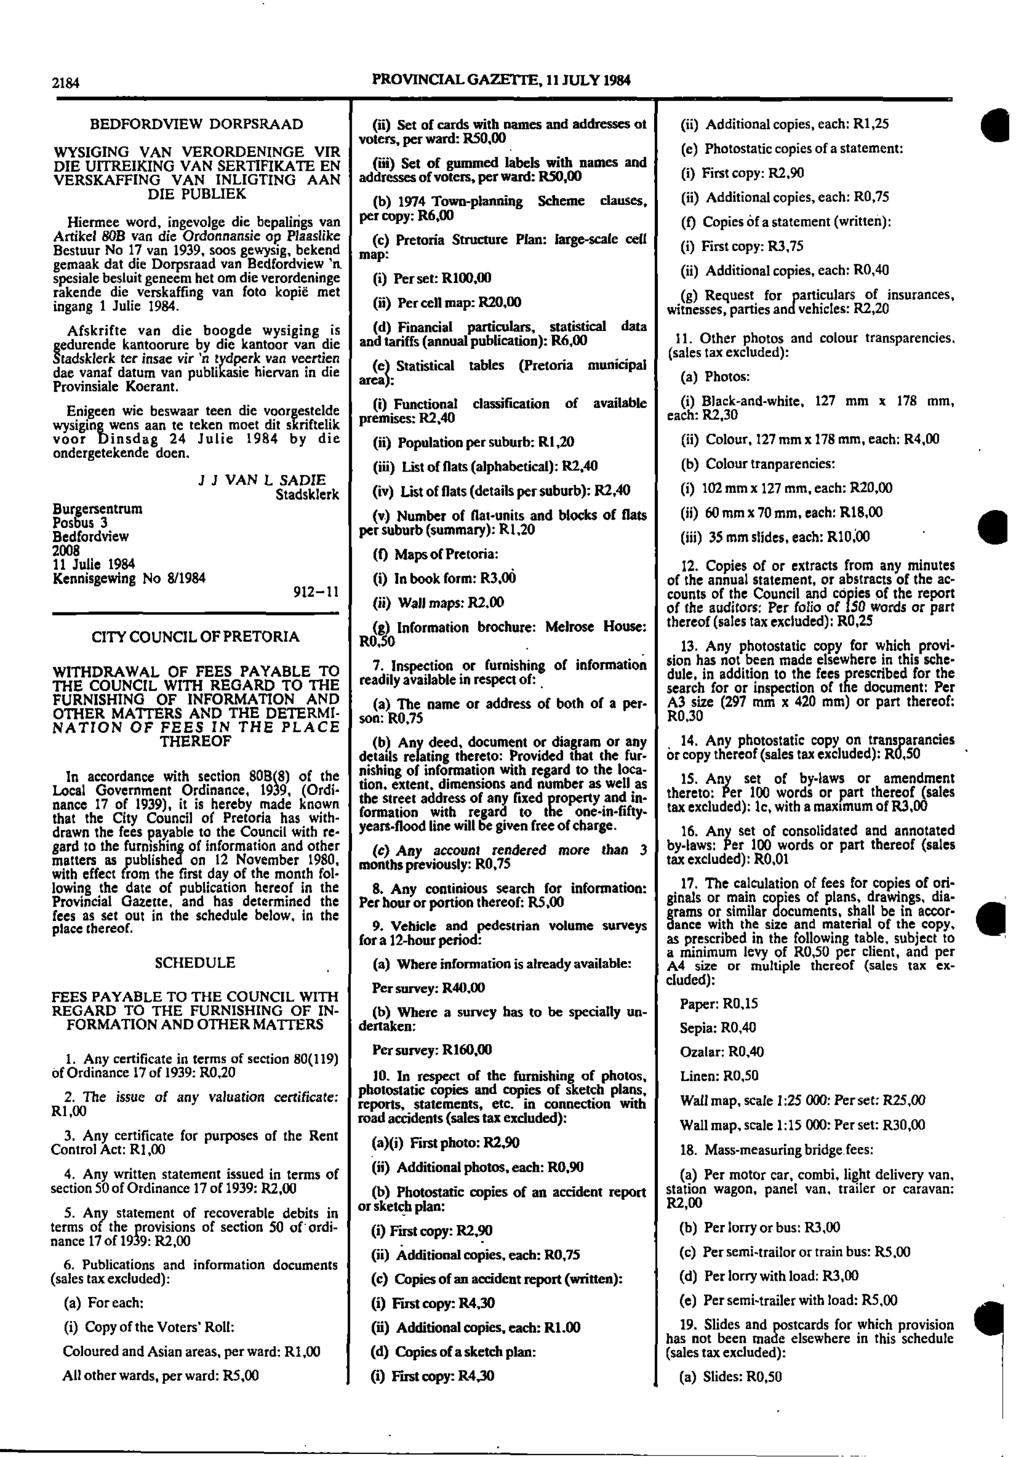 2184 PROVINCIAL GAZETTE II JULY 1984 BEDFORDVIEW DORPSRAAD (ii) Set of cards with names and addresses of (ii) Additional copies each: R125 WYSIGING VAN VERORDENINGE VIR voters per ward: 85000 (e)